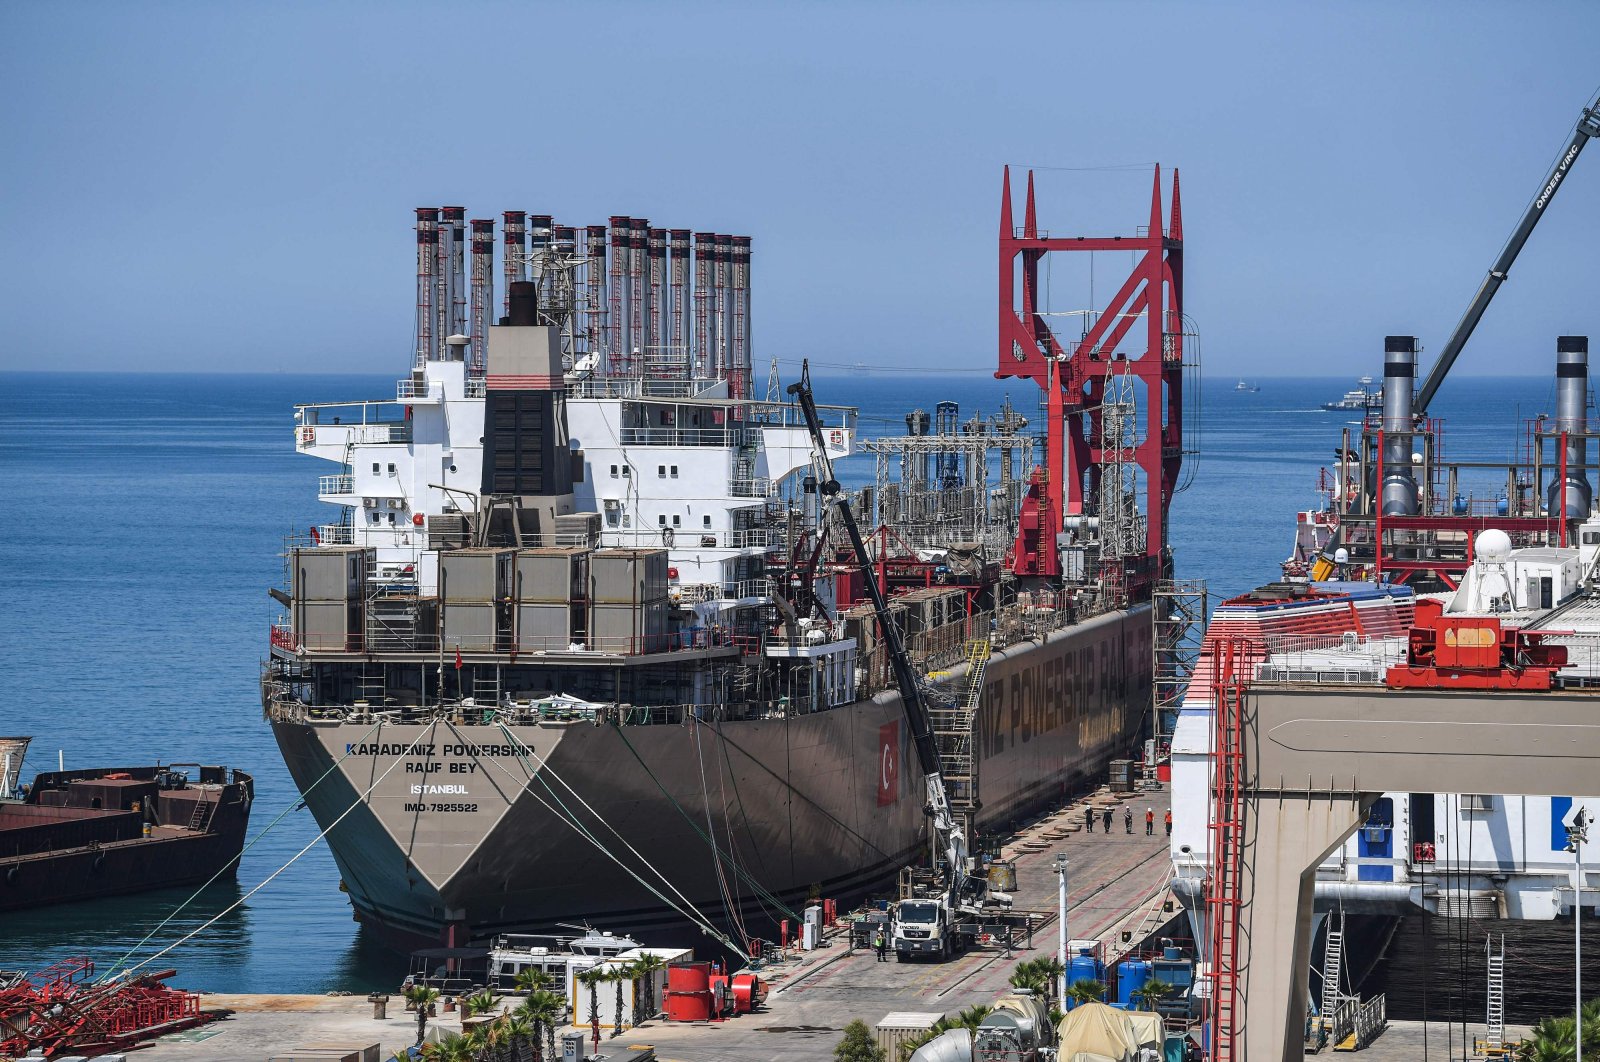 Karadeniz Holding's Raif Bey power ship docked in a shipyard of Altınova district, Yalova, June 16, 2020. (AFP Photo)